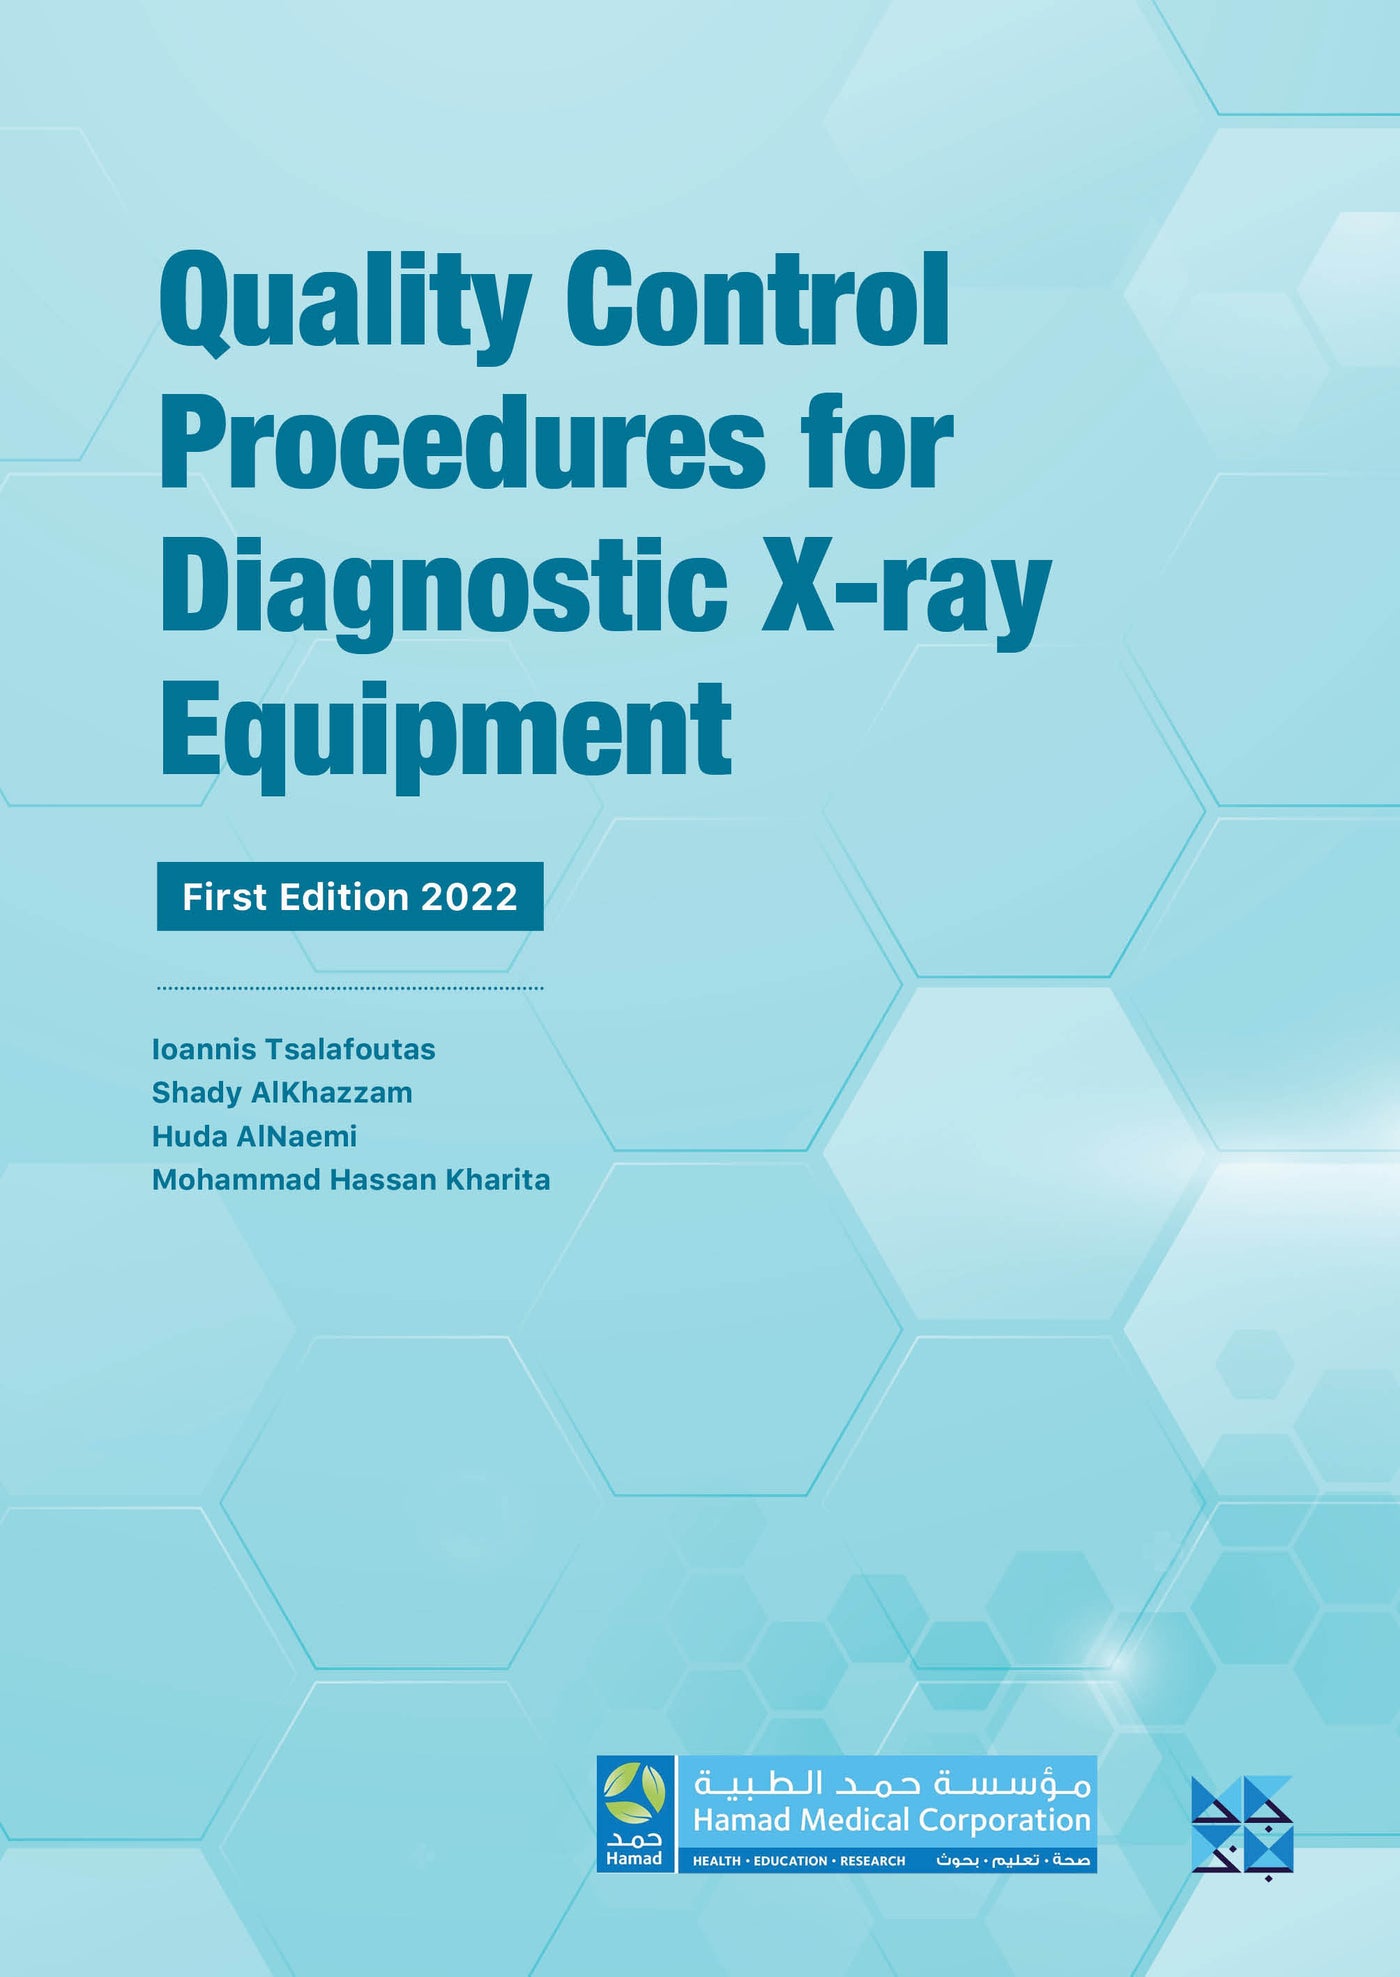 Diagnostic X-ray Equipment Quality Control